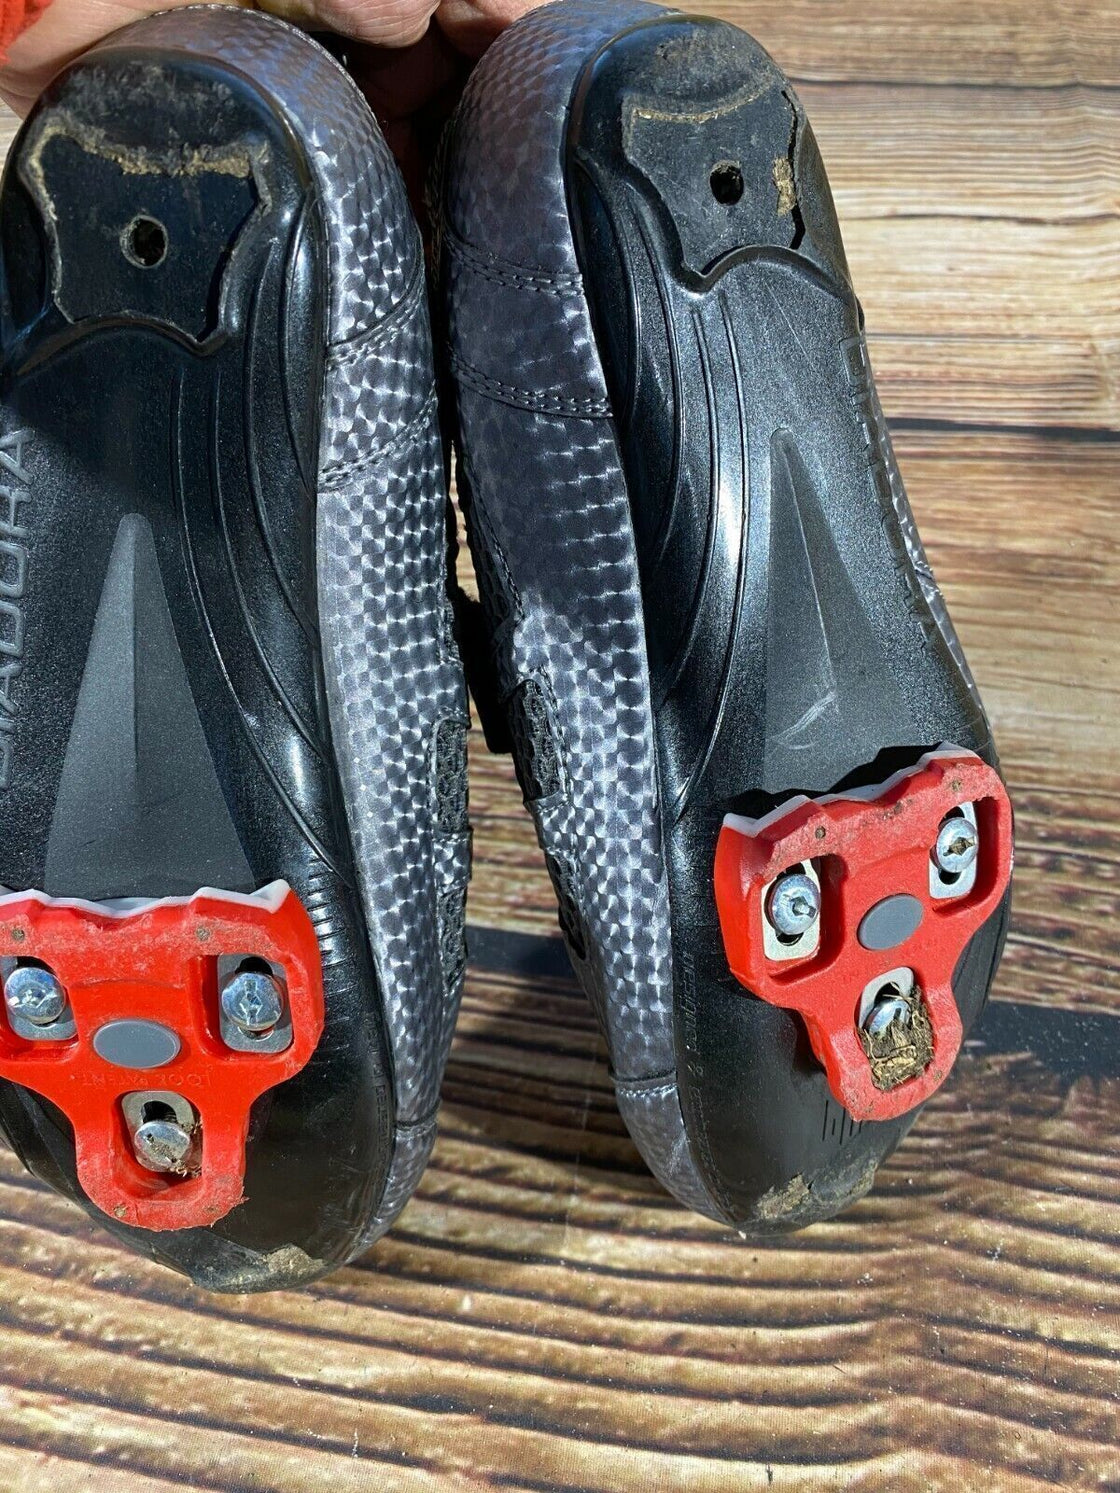 DIADORA Road Cycling Shoes Clipless Biking Boots Size EU 39 with Cleats